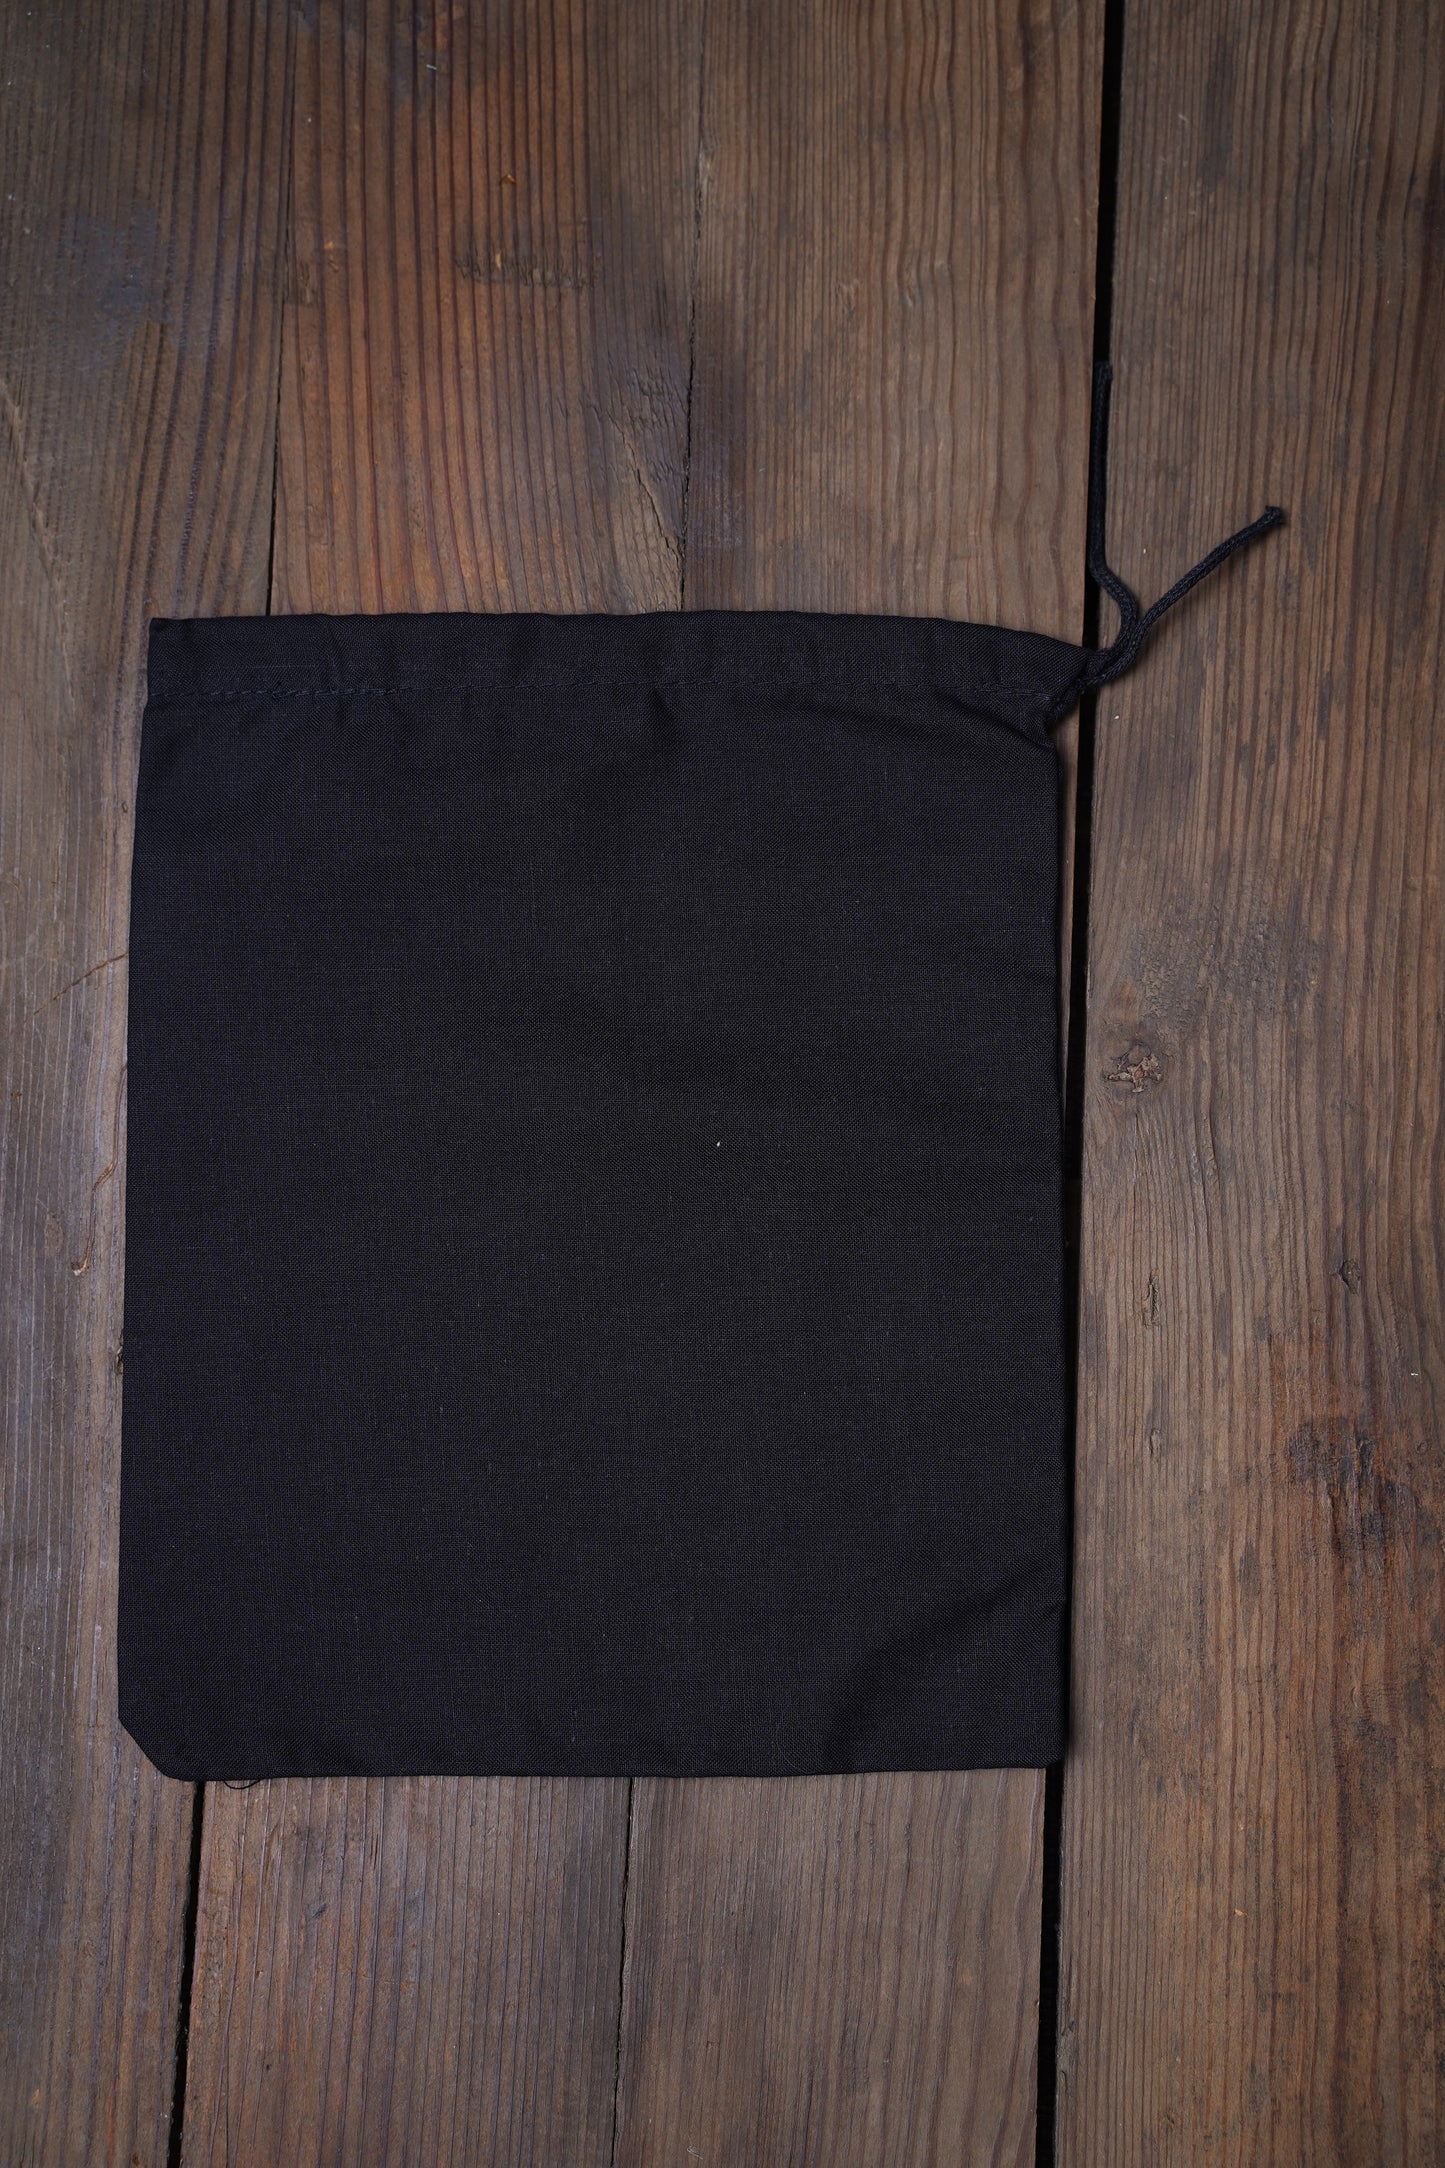 12x16 Inches Reusable Eco-Friendly Cotton Double Drawstring Bags Black Color